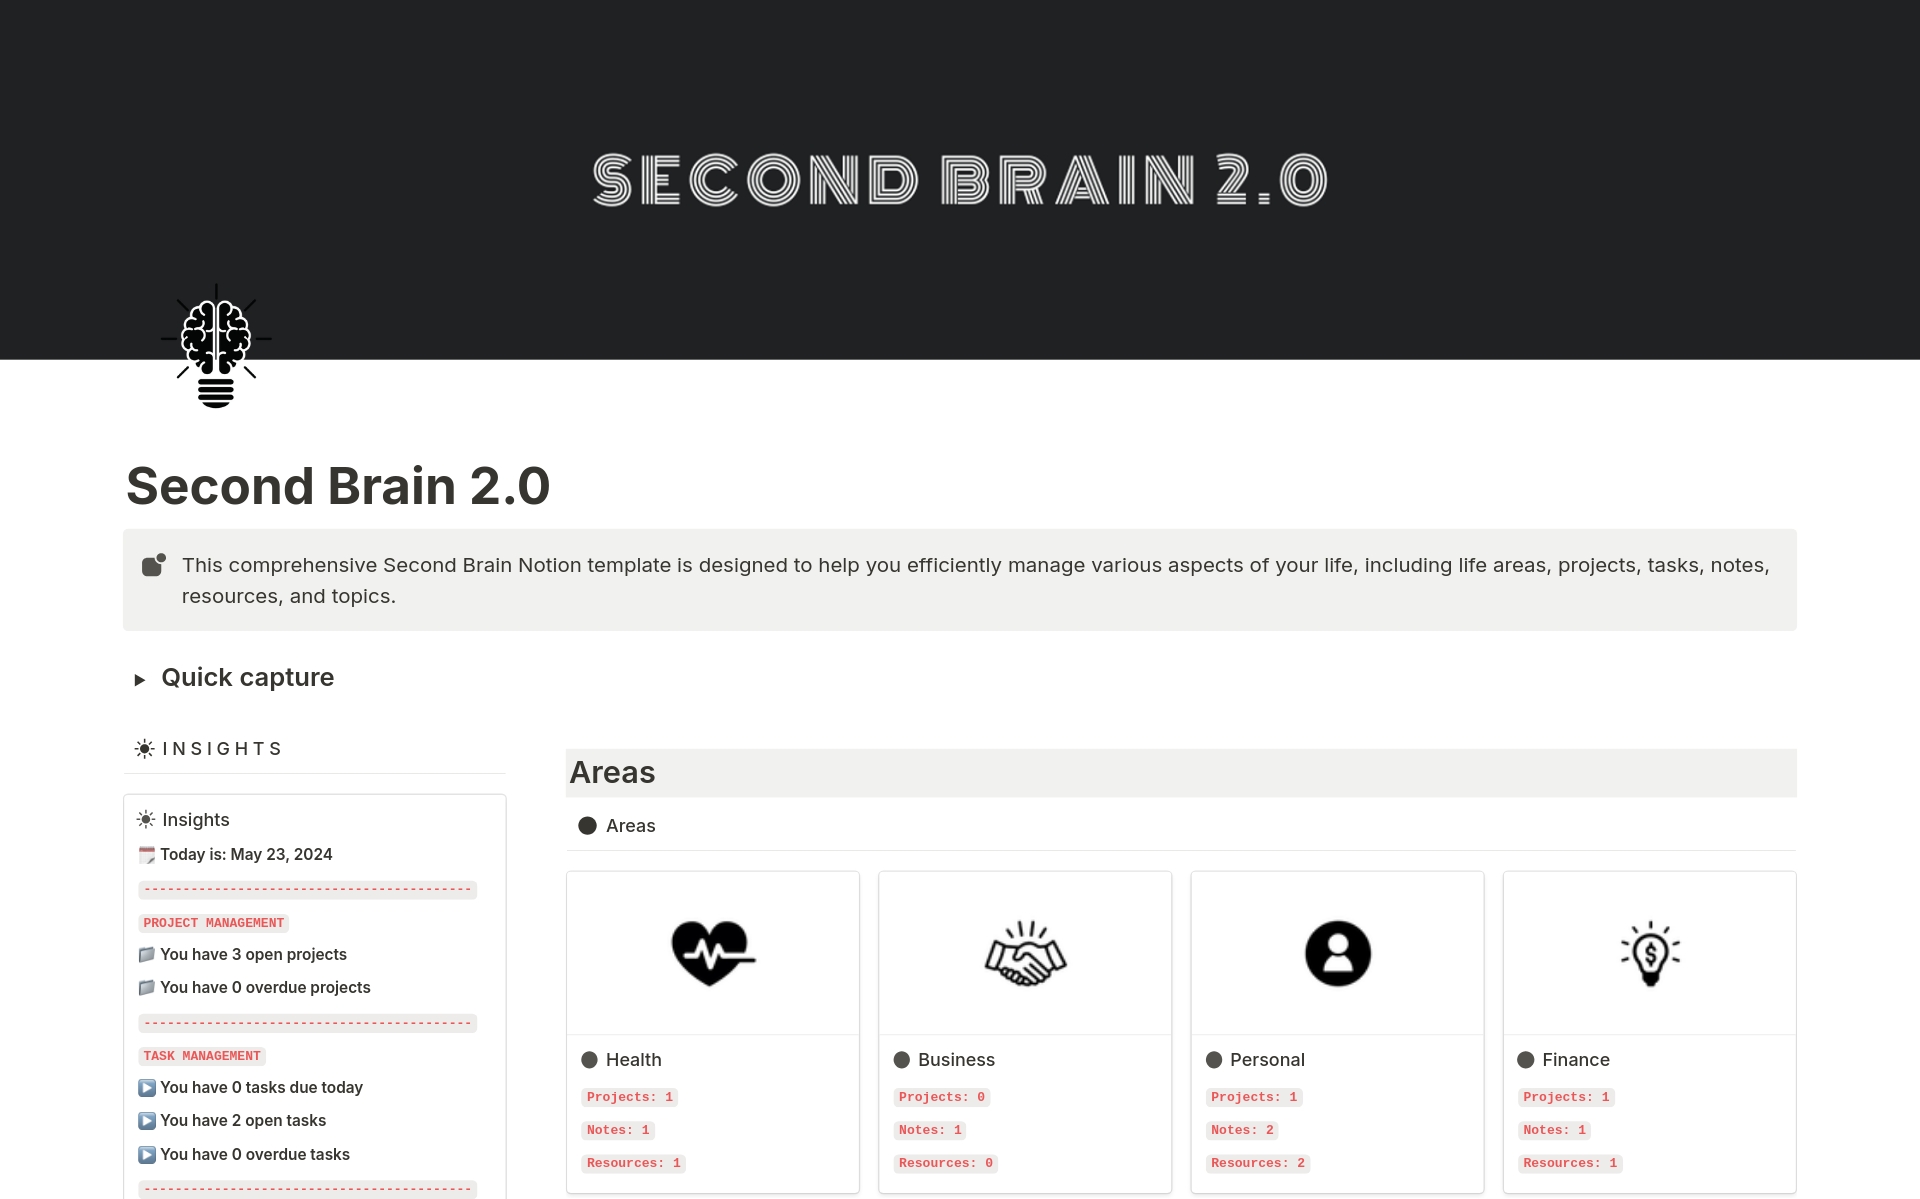 Aperçu du modèle de Second Brain 2.0